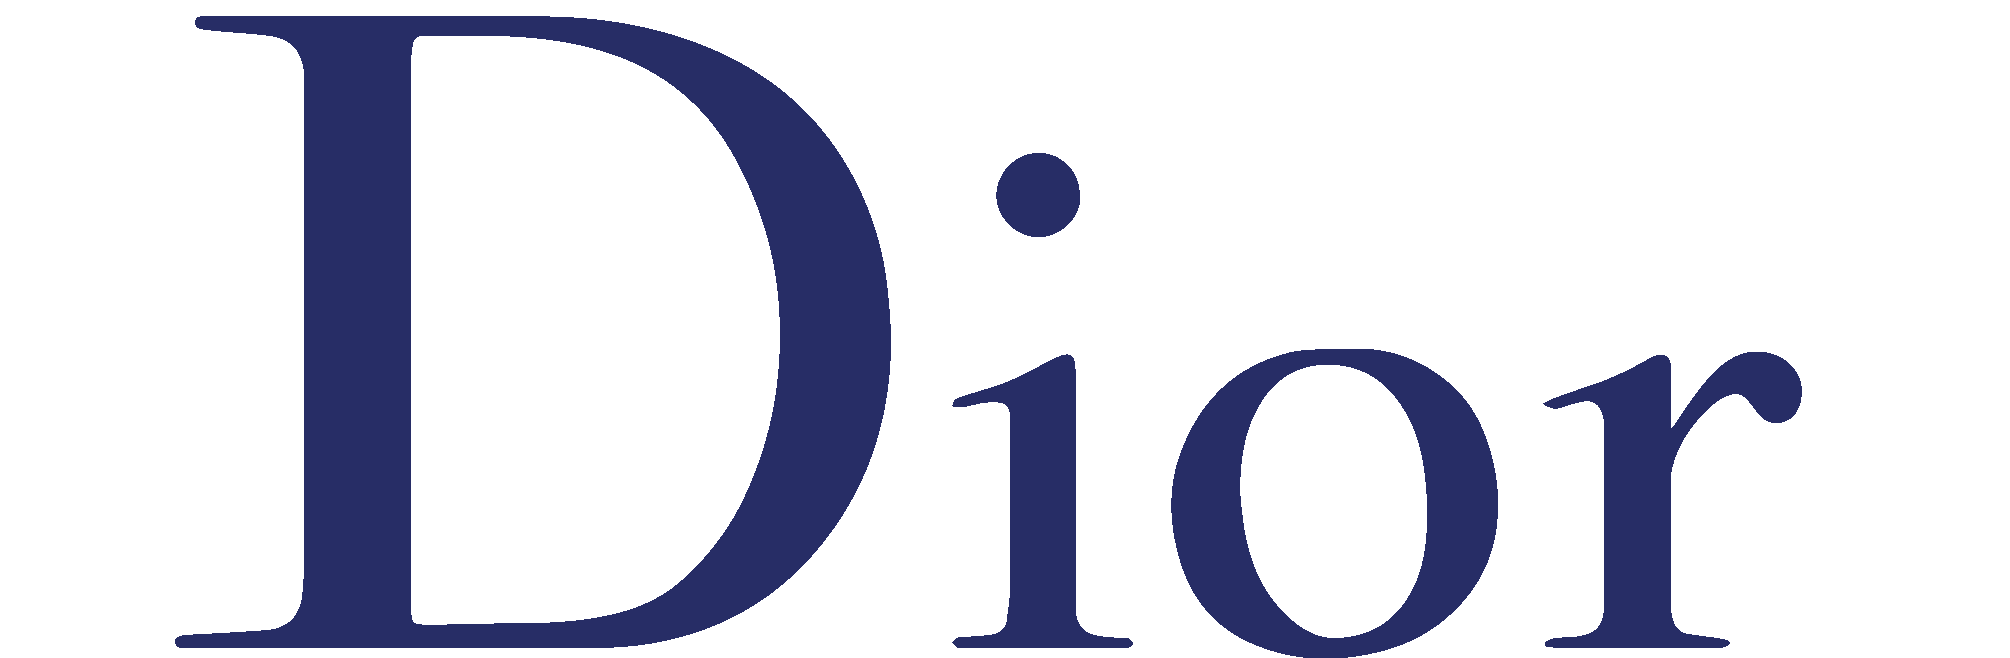 Christian-Dior